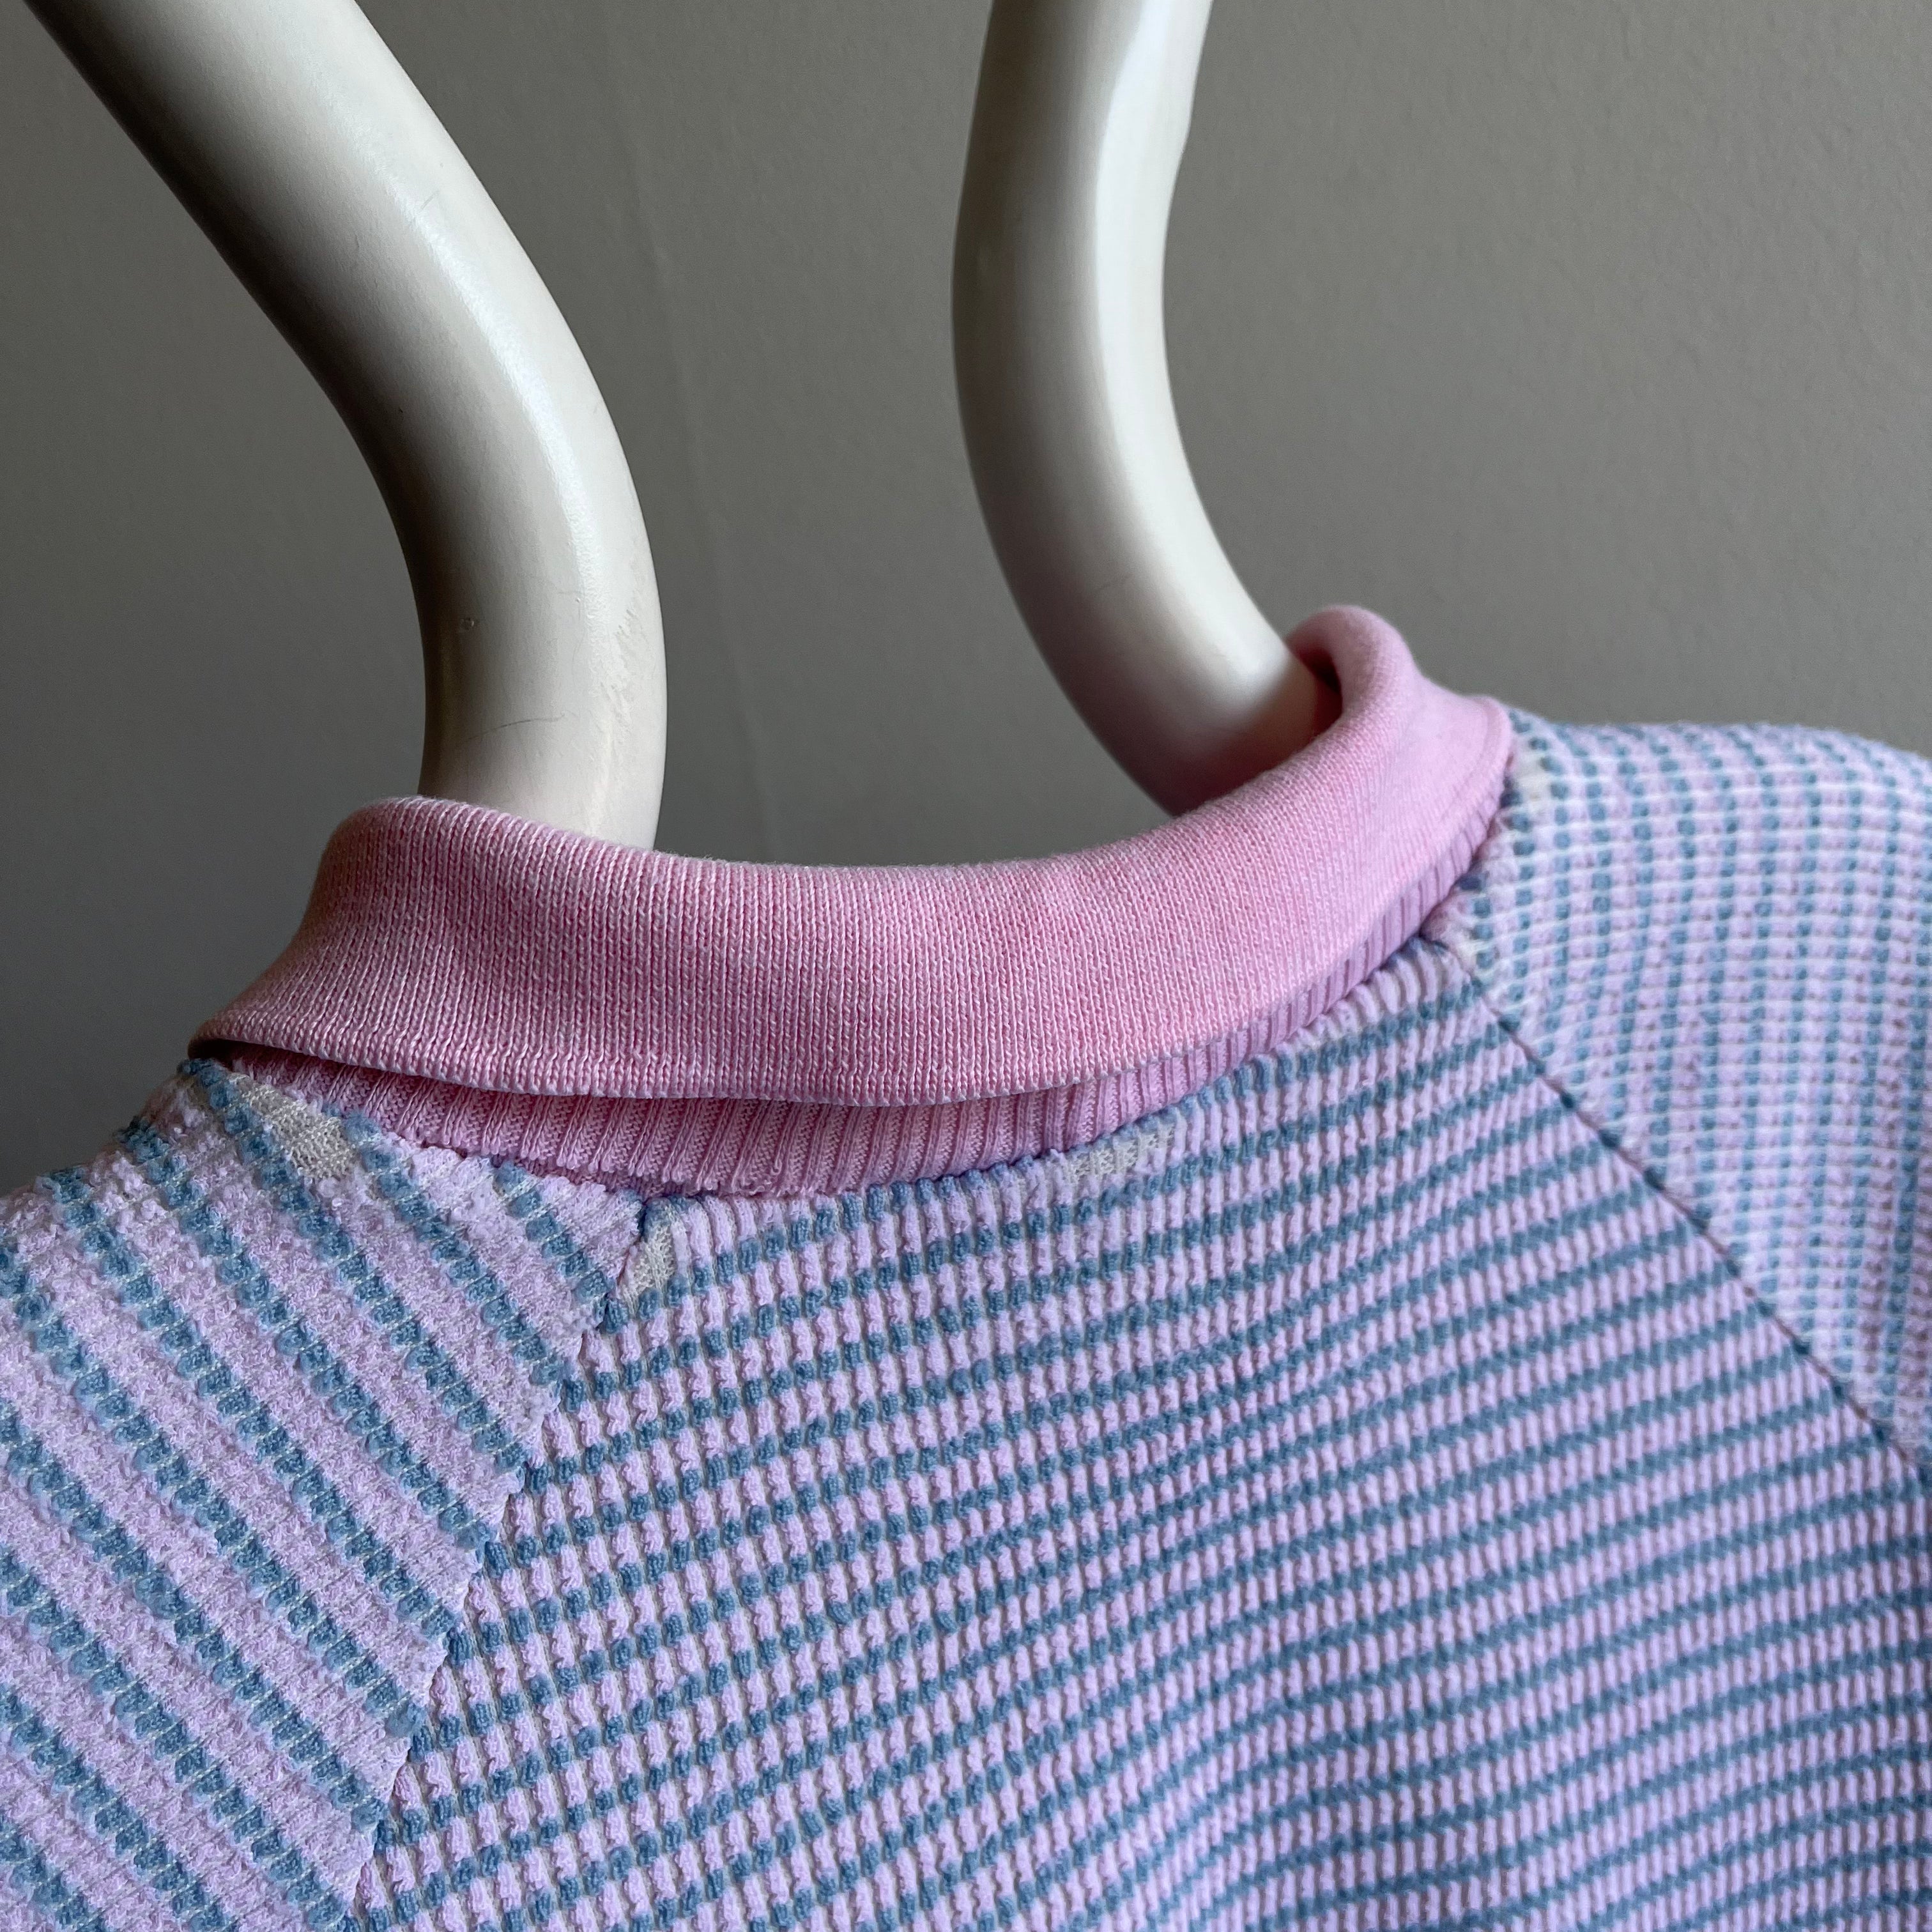 1980s Hip Grandma Style Sweater/Sweatshirt